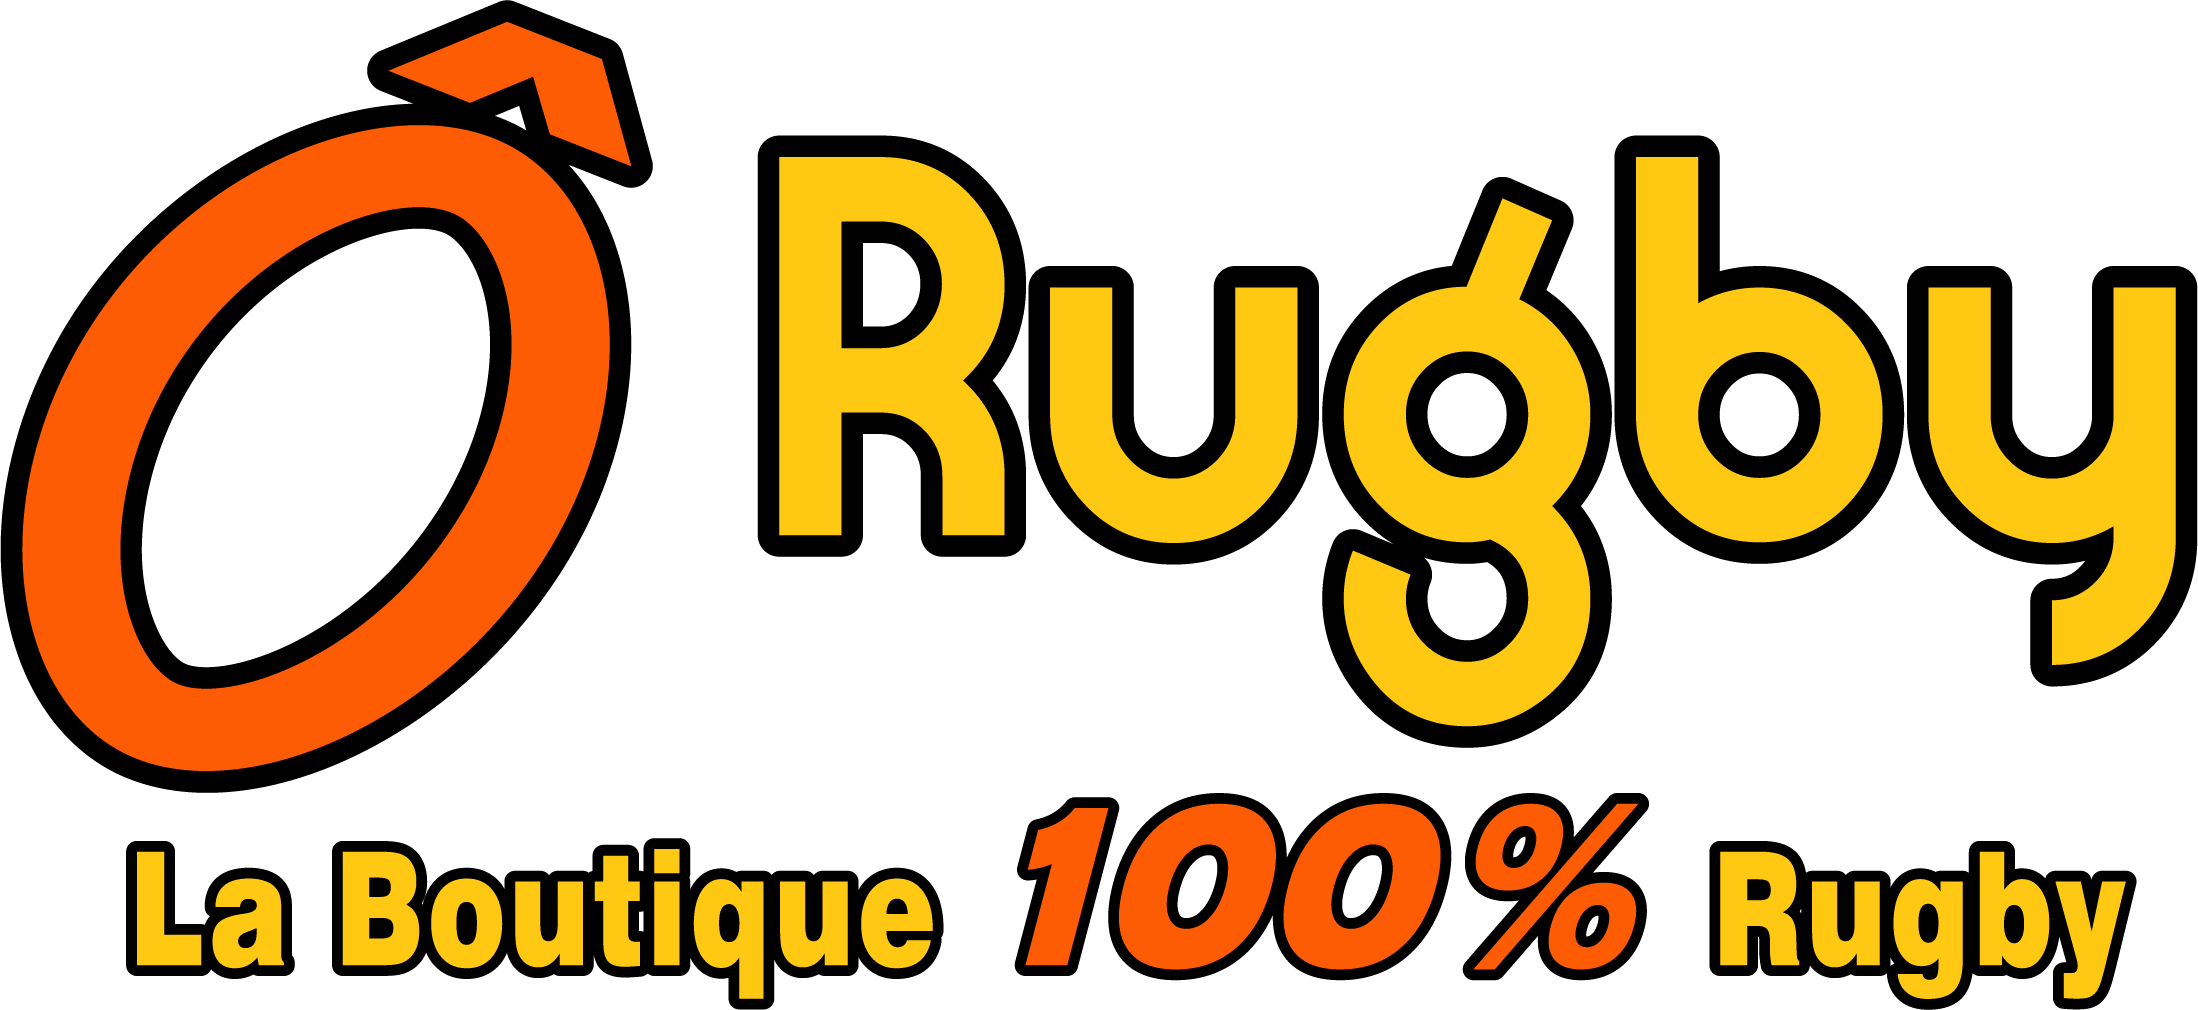 Ô Rugby - La boutique 100% Rugby